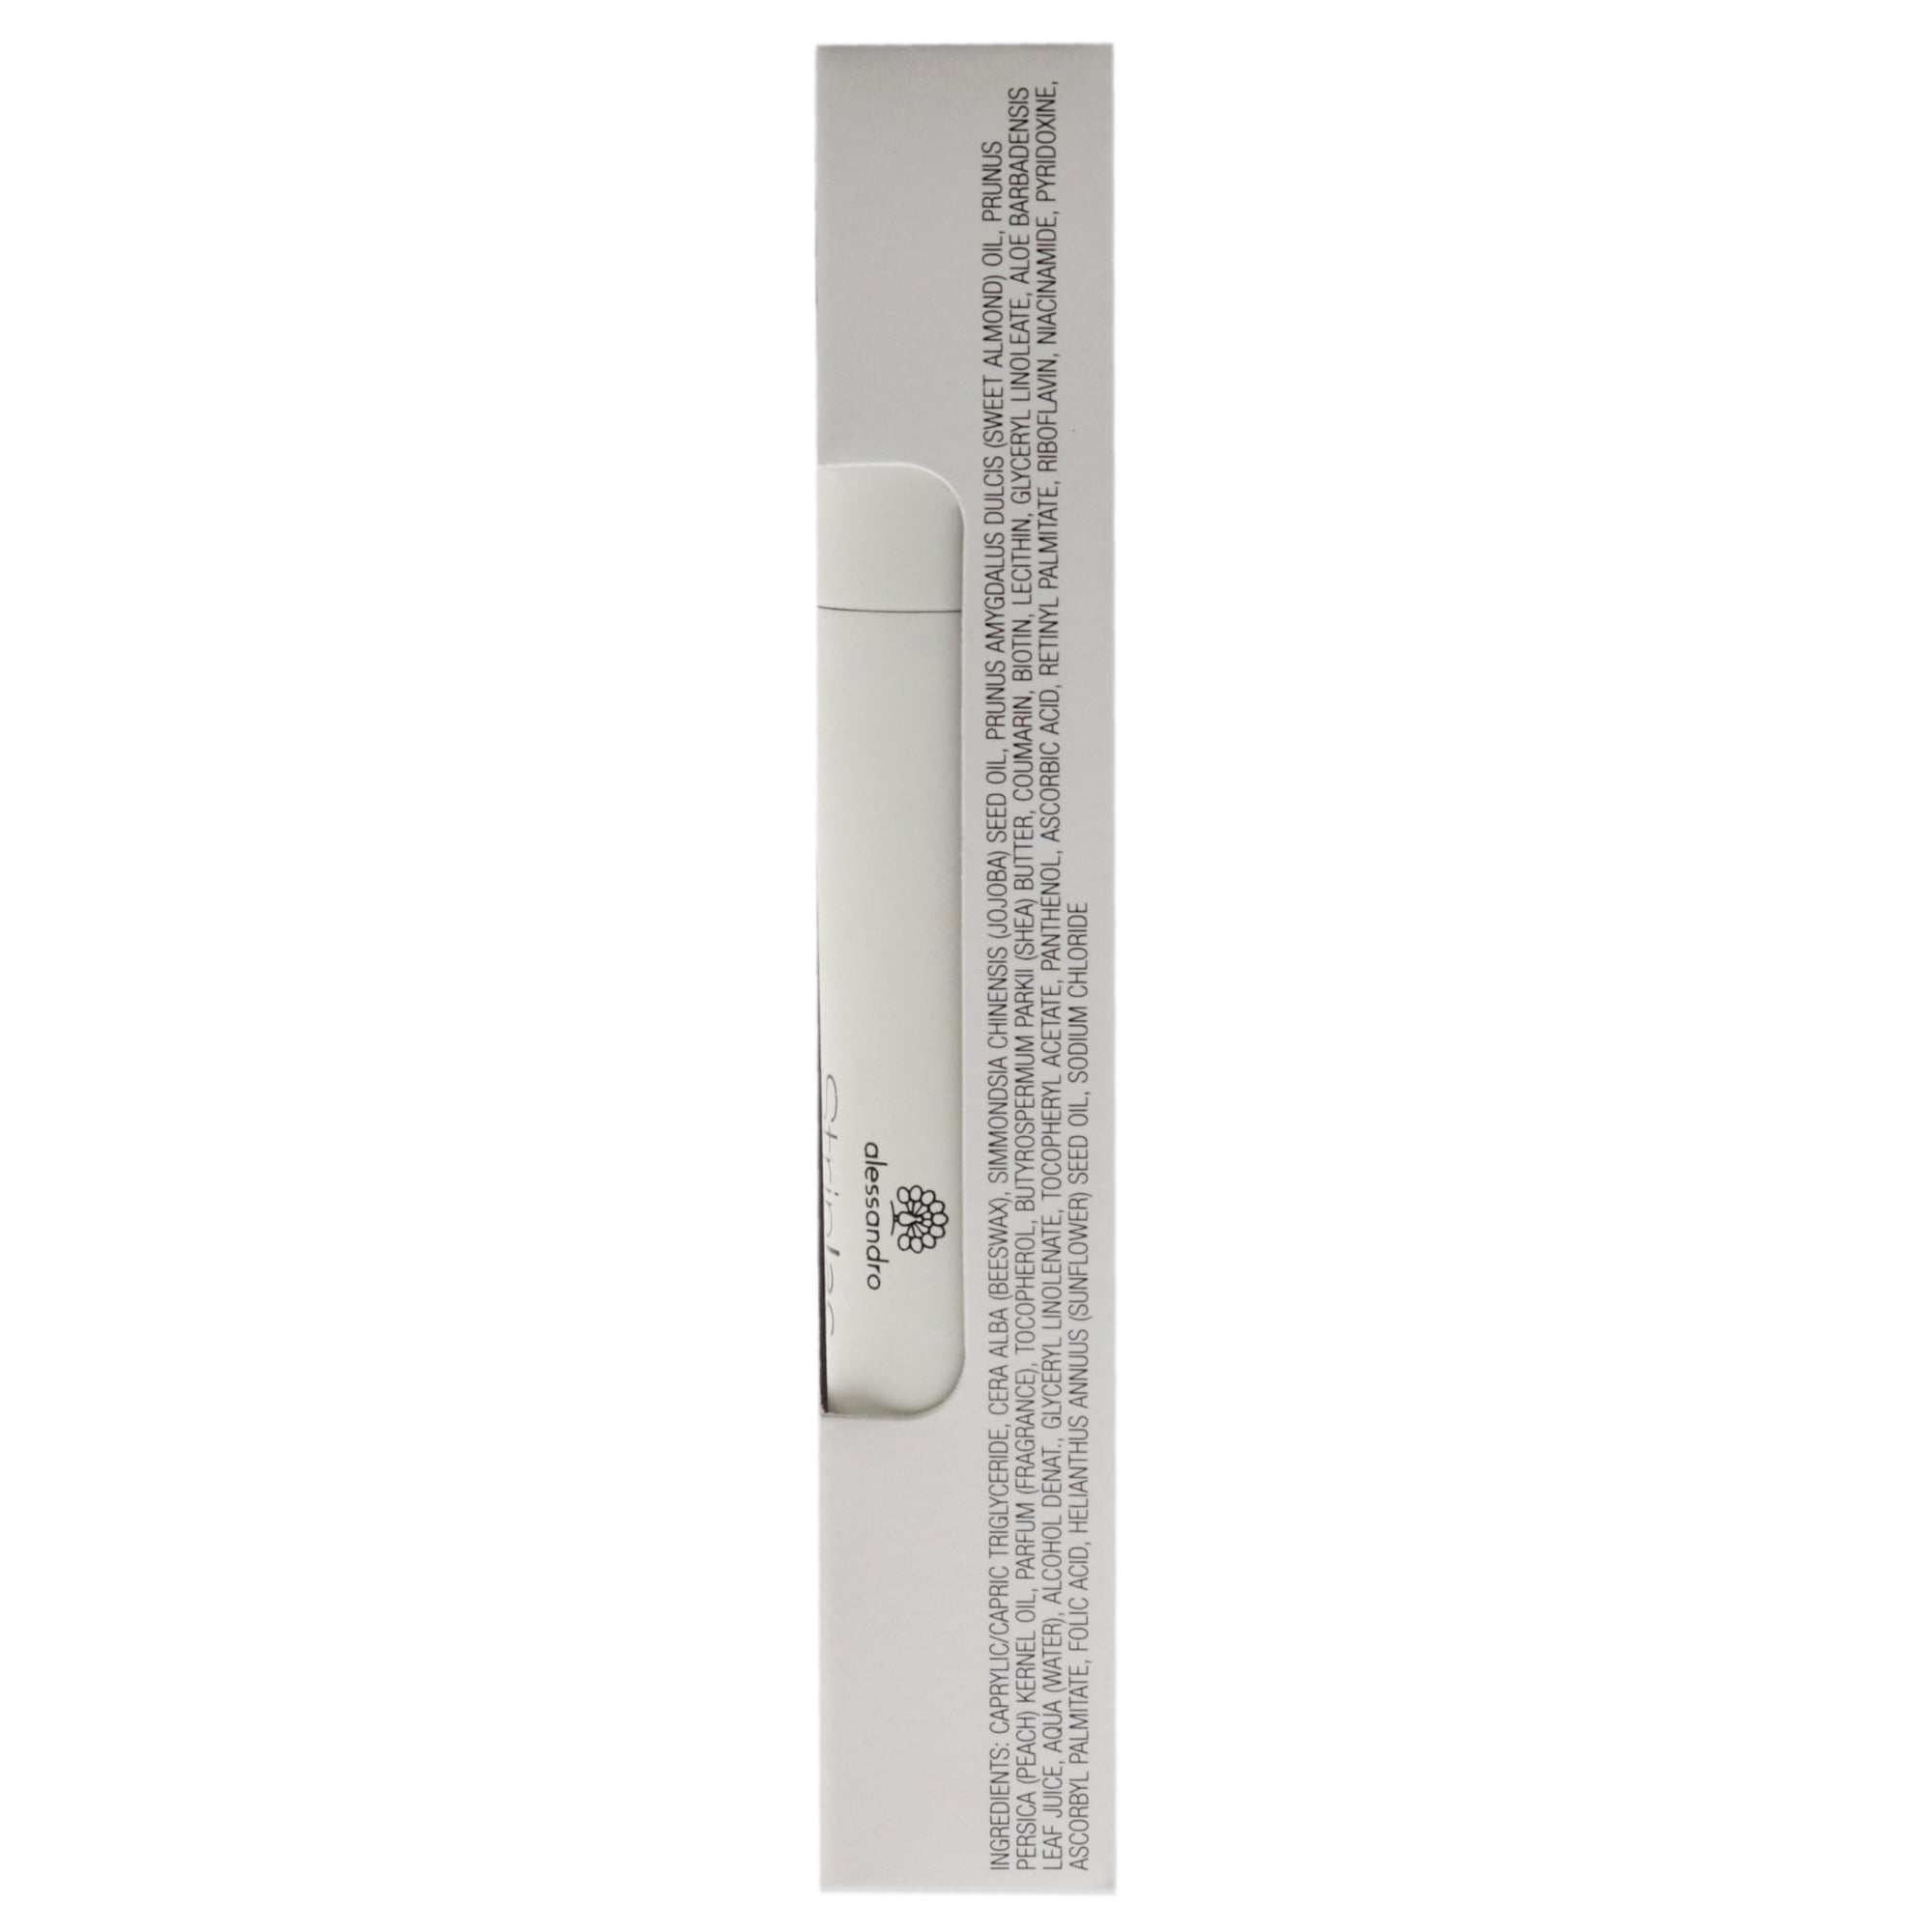 Alessandro Striplac Peel or Soak Care and Gloss Pen, 0.09 oz Treatment | Nagelpflege-Öle